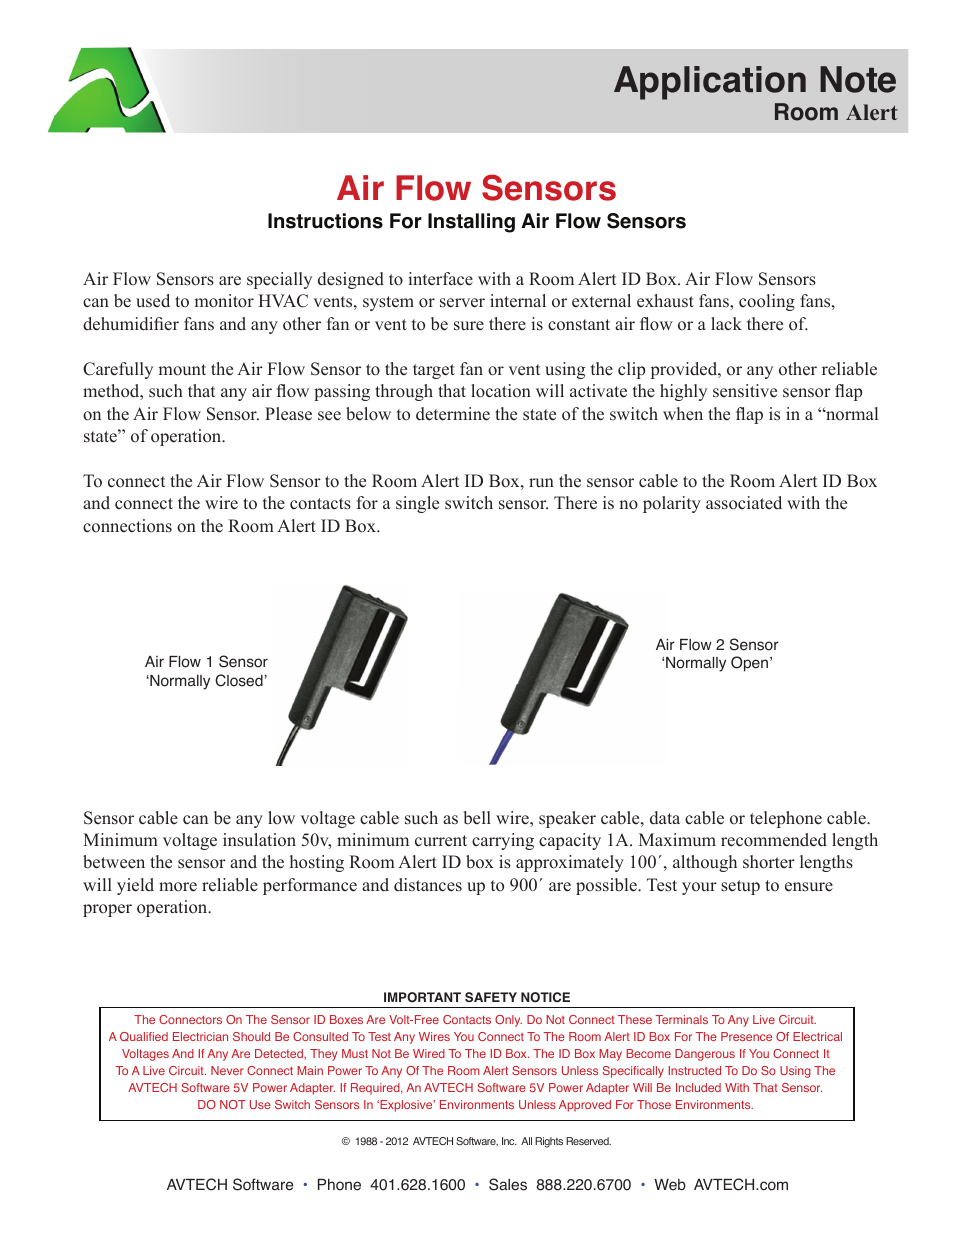 Air Flow 1 Sensor (RMA-AF1-SEN)